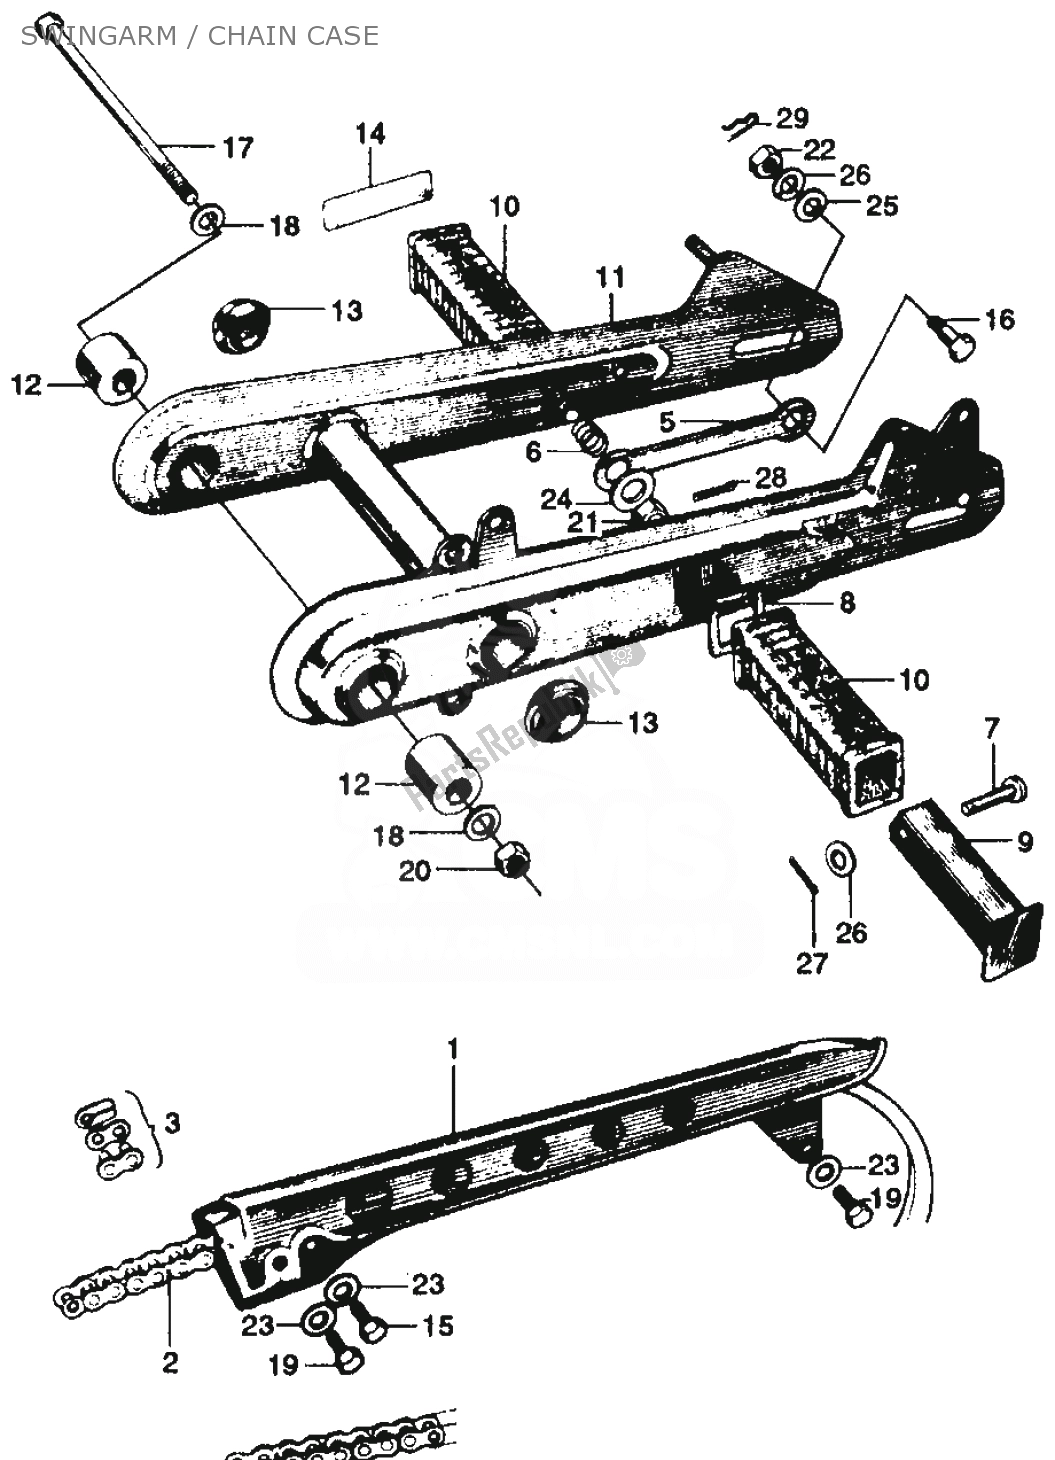 Todas las partes para Swingarm / Chain Case de Honda SS 125 1967